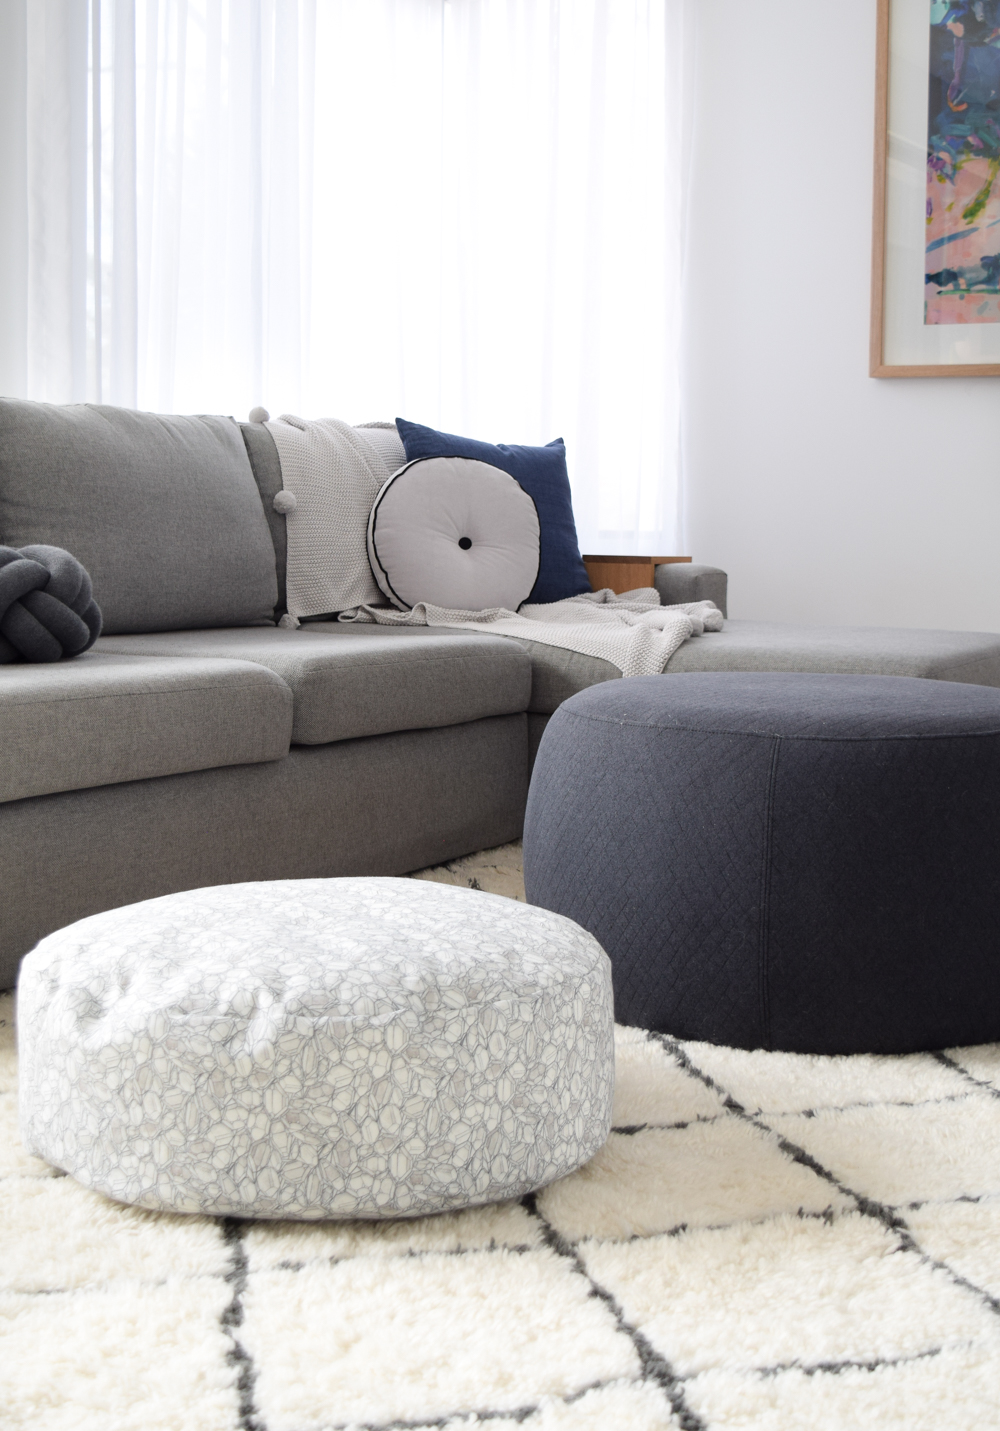 Kmart hack kids cushion turns luxe floor cushion